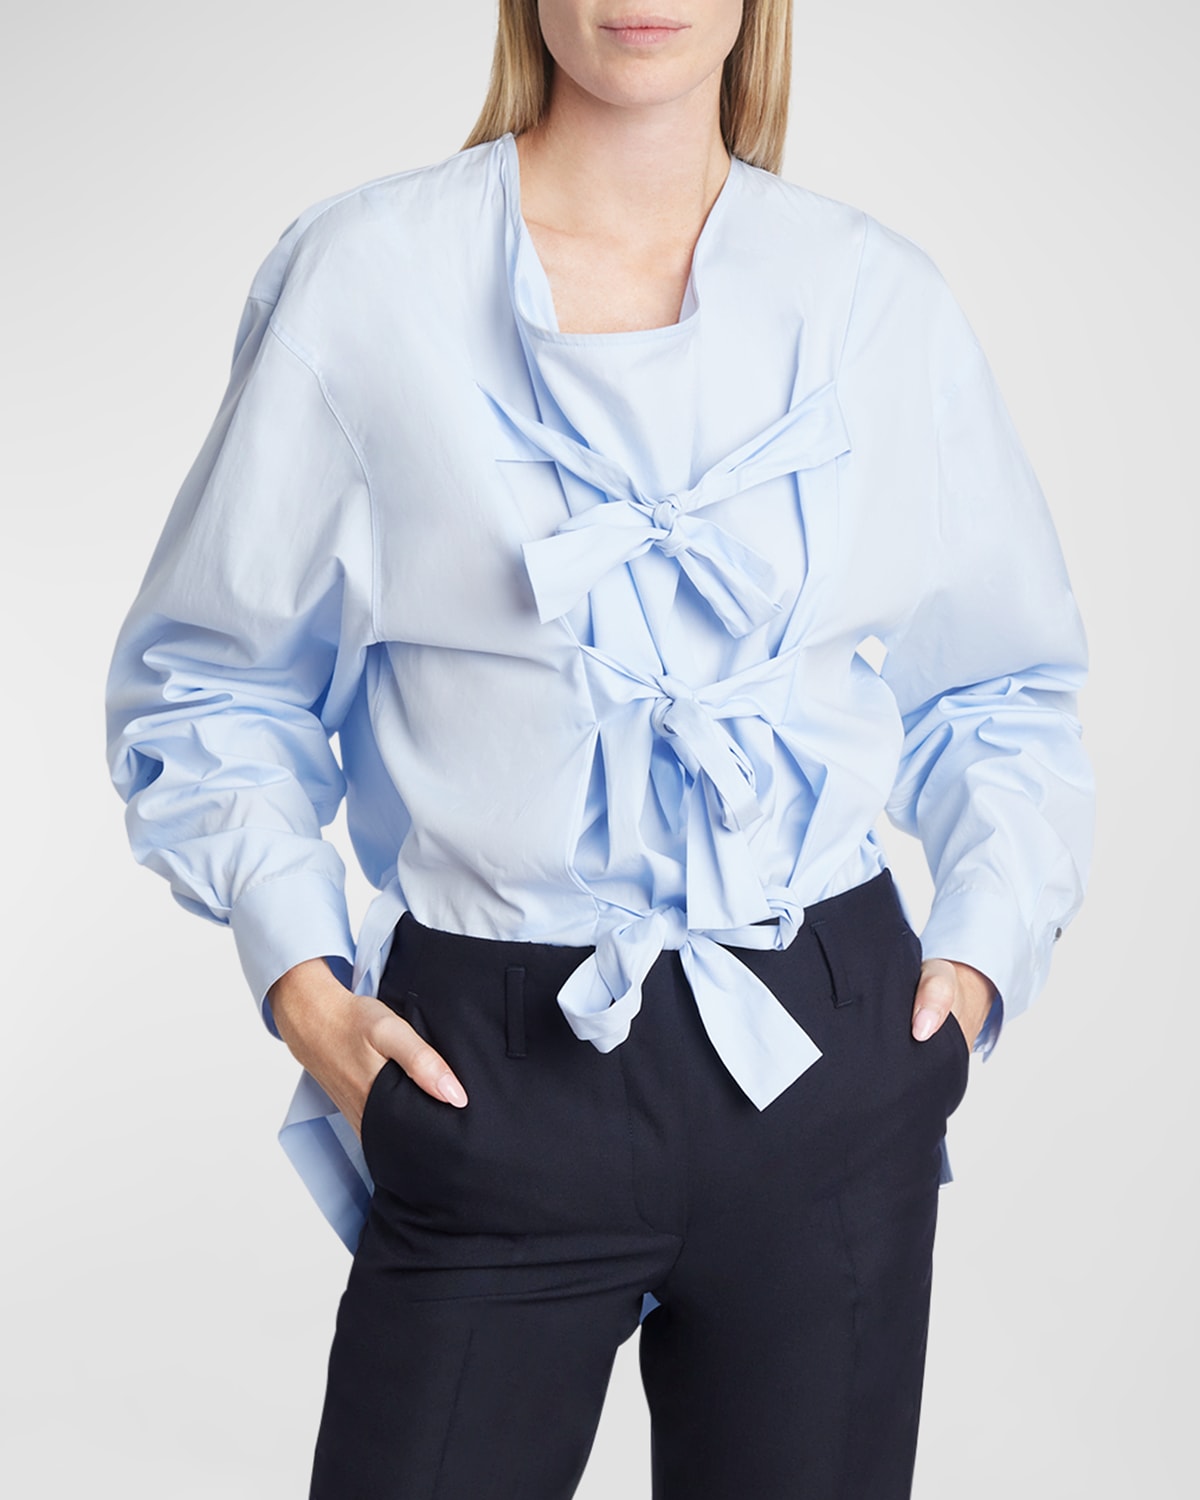 Dries Van Noten Cabara Oversize Shirt With Bow Detail In Light Blue